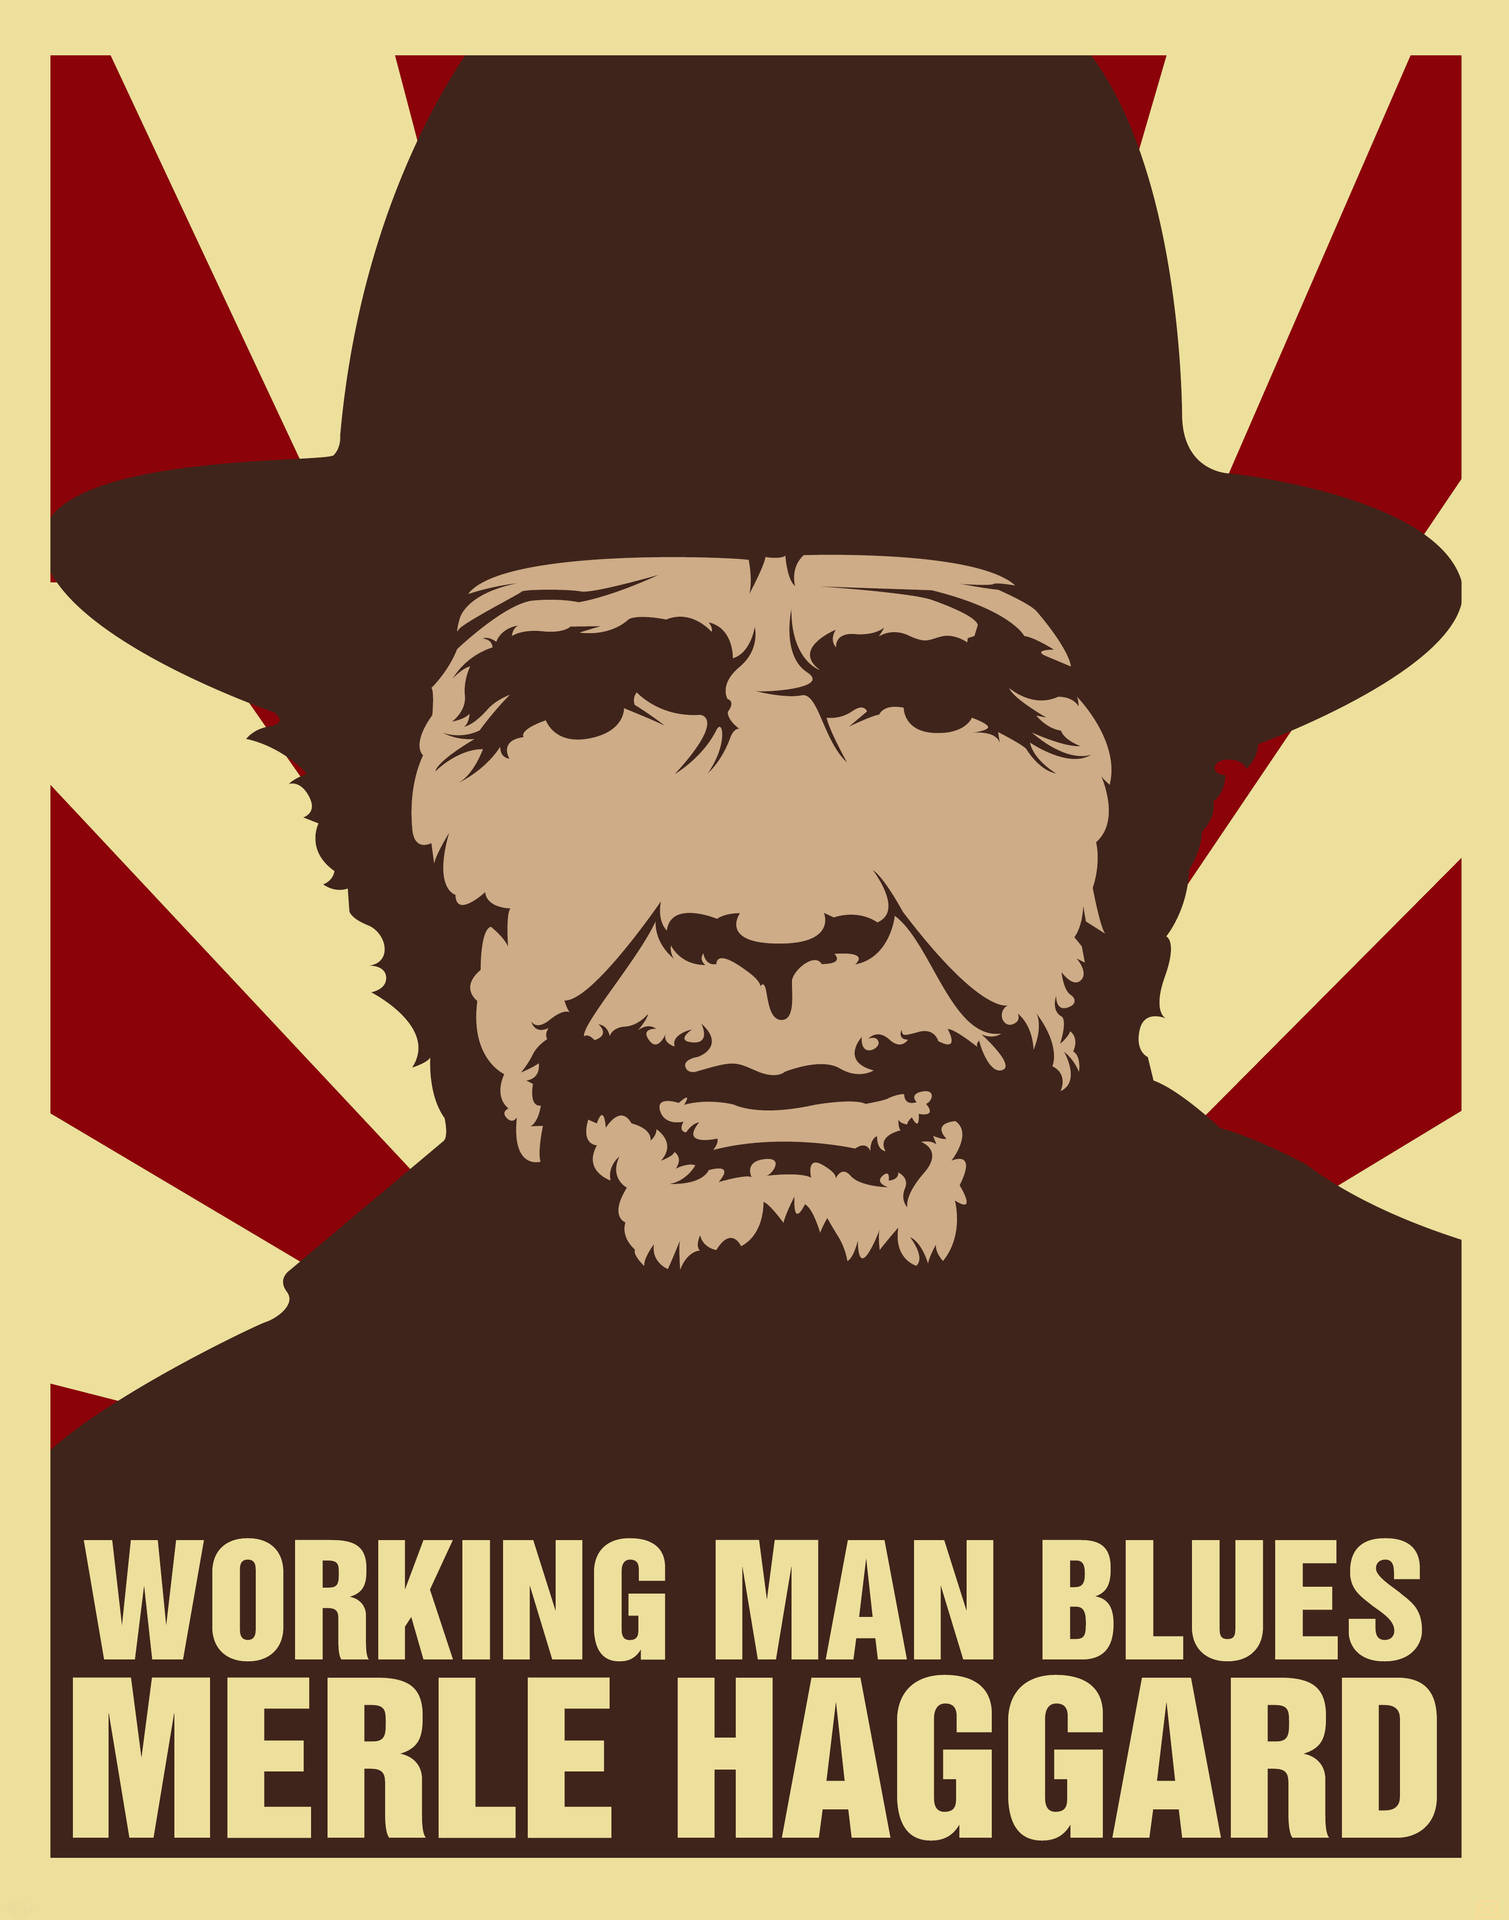 1. Working Man Blues Merle Haggard Wallpaper